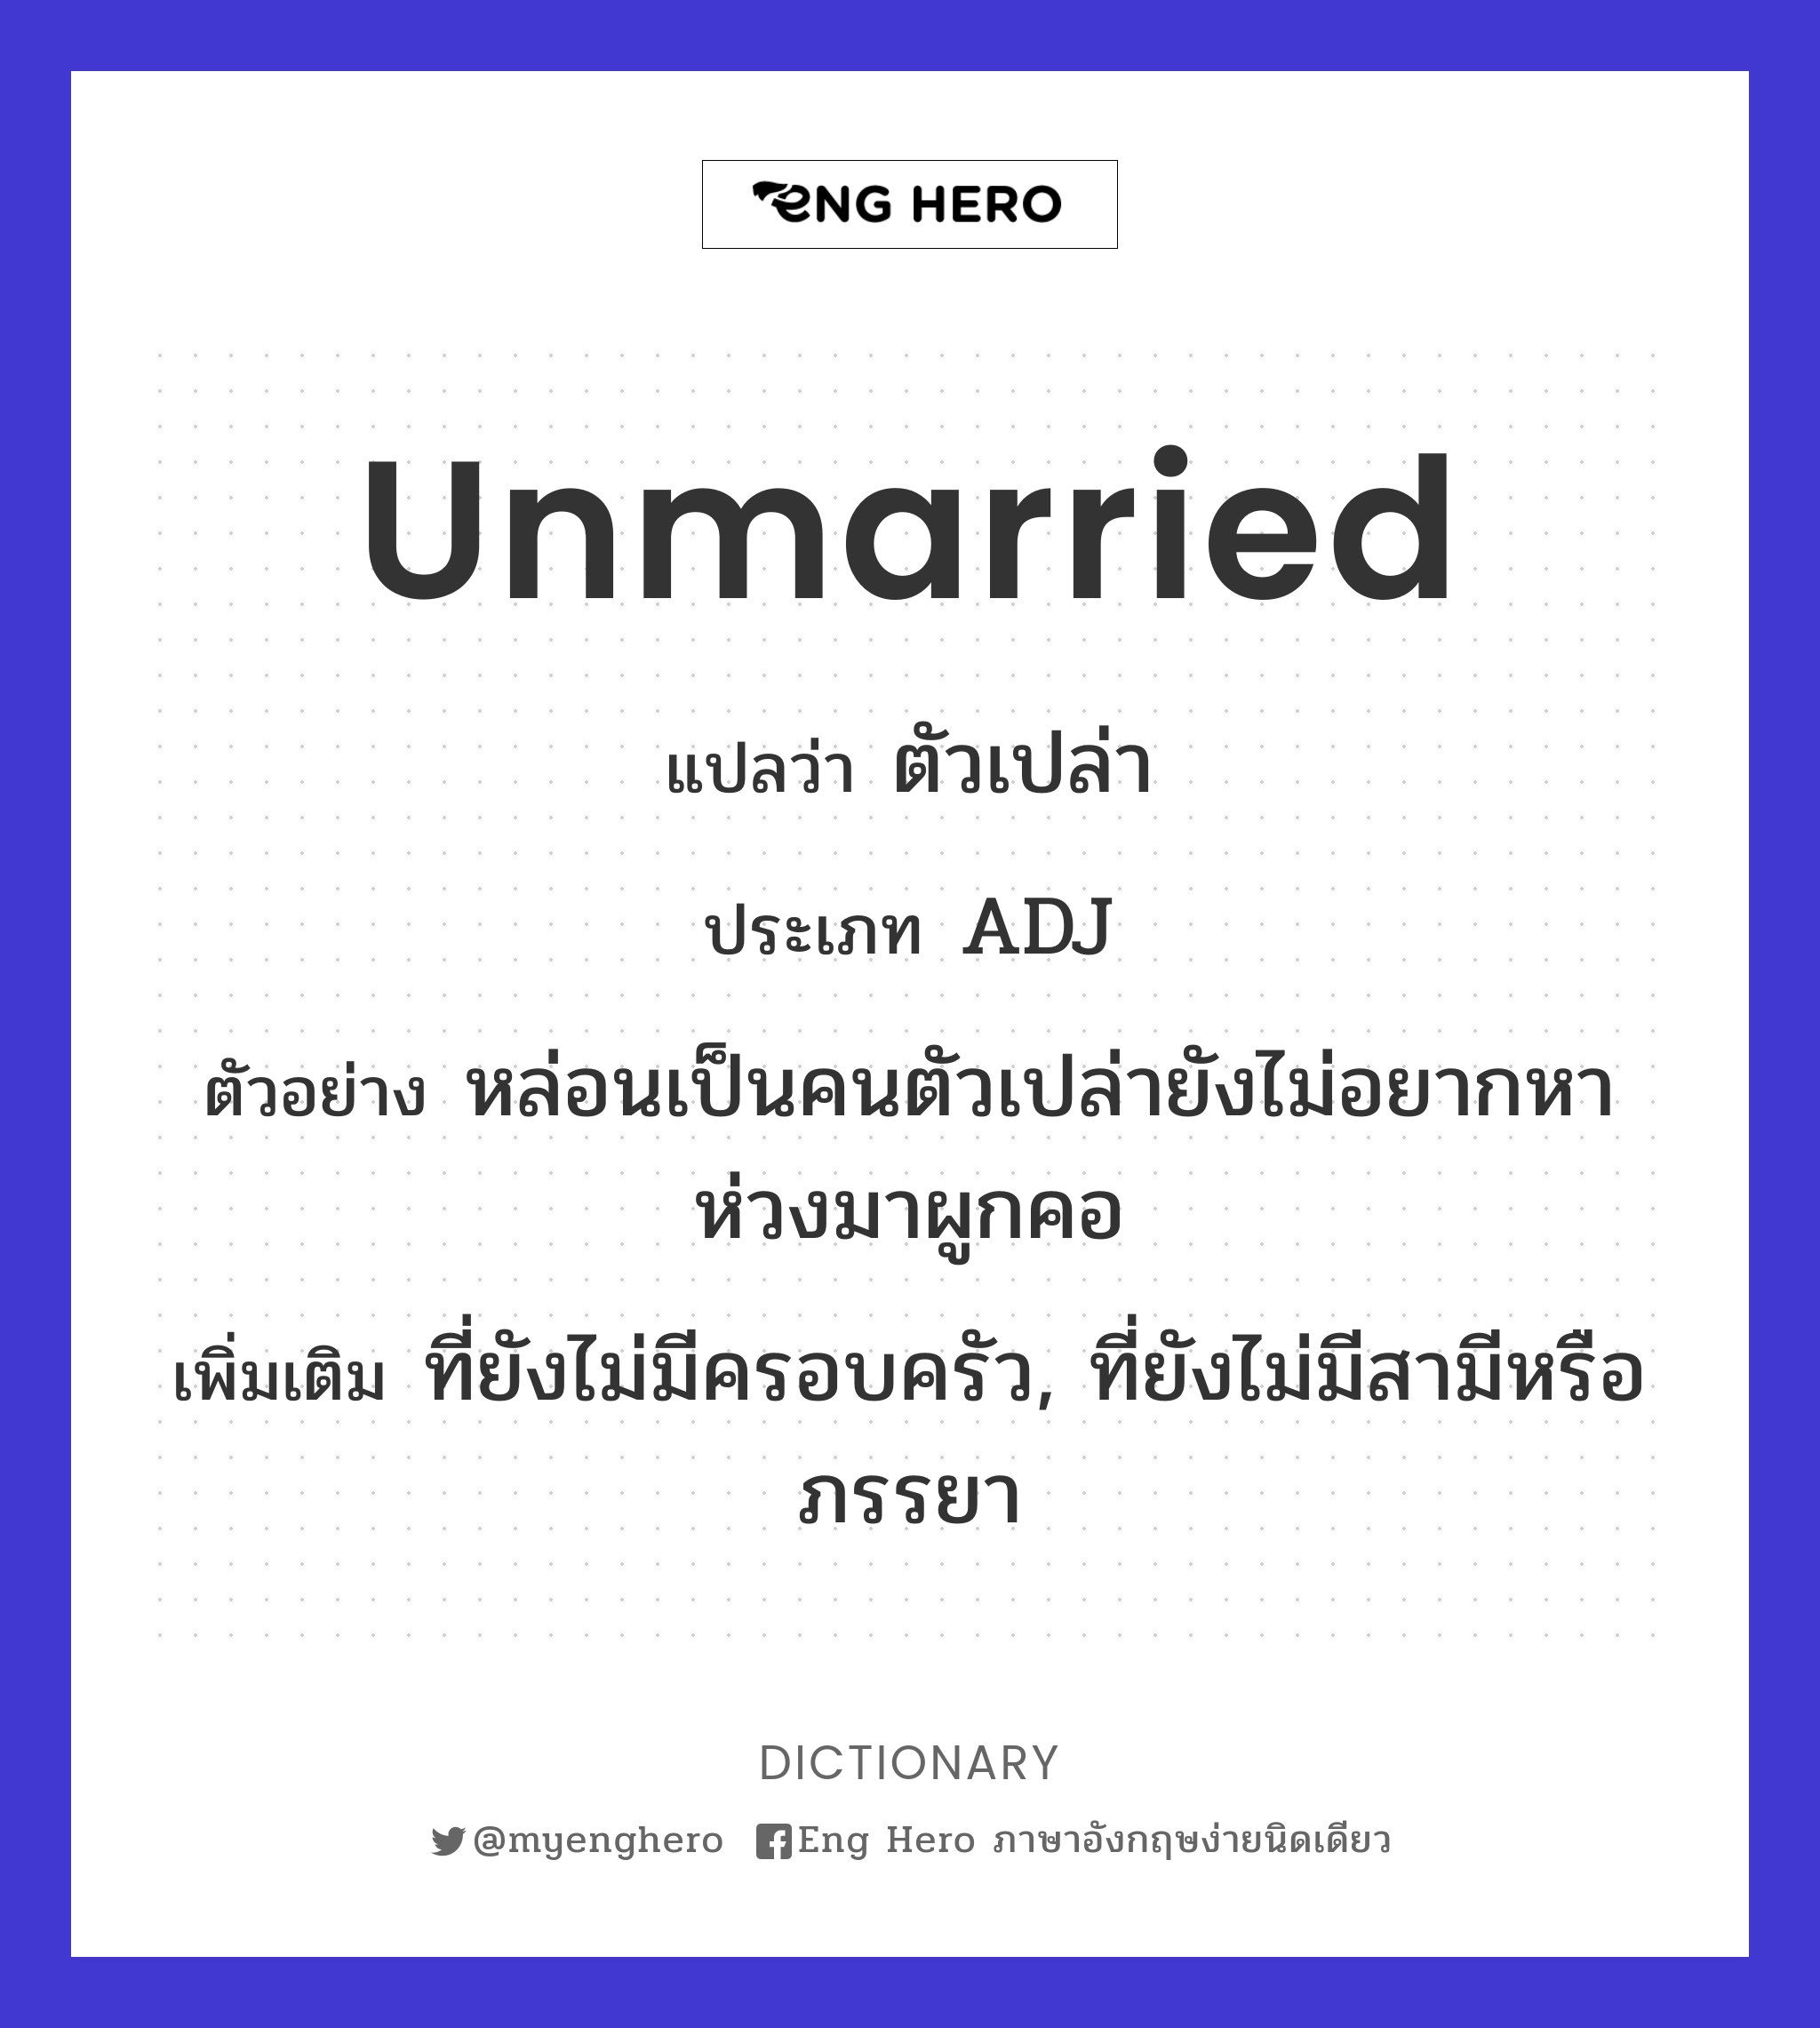 unmarried